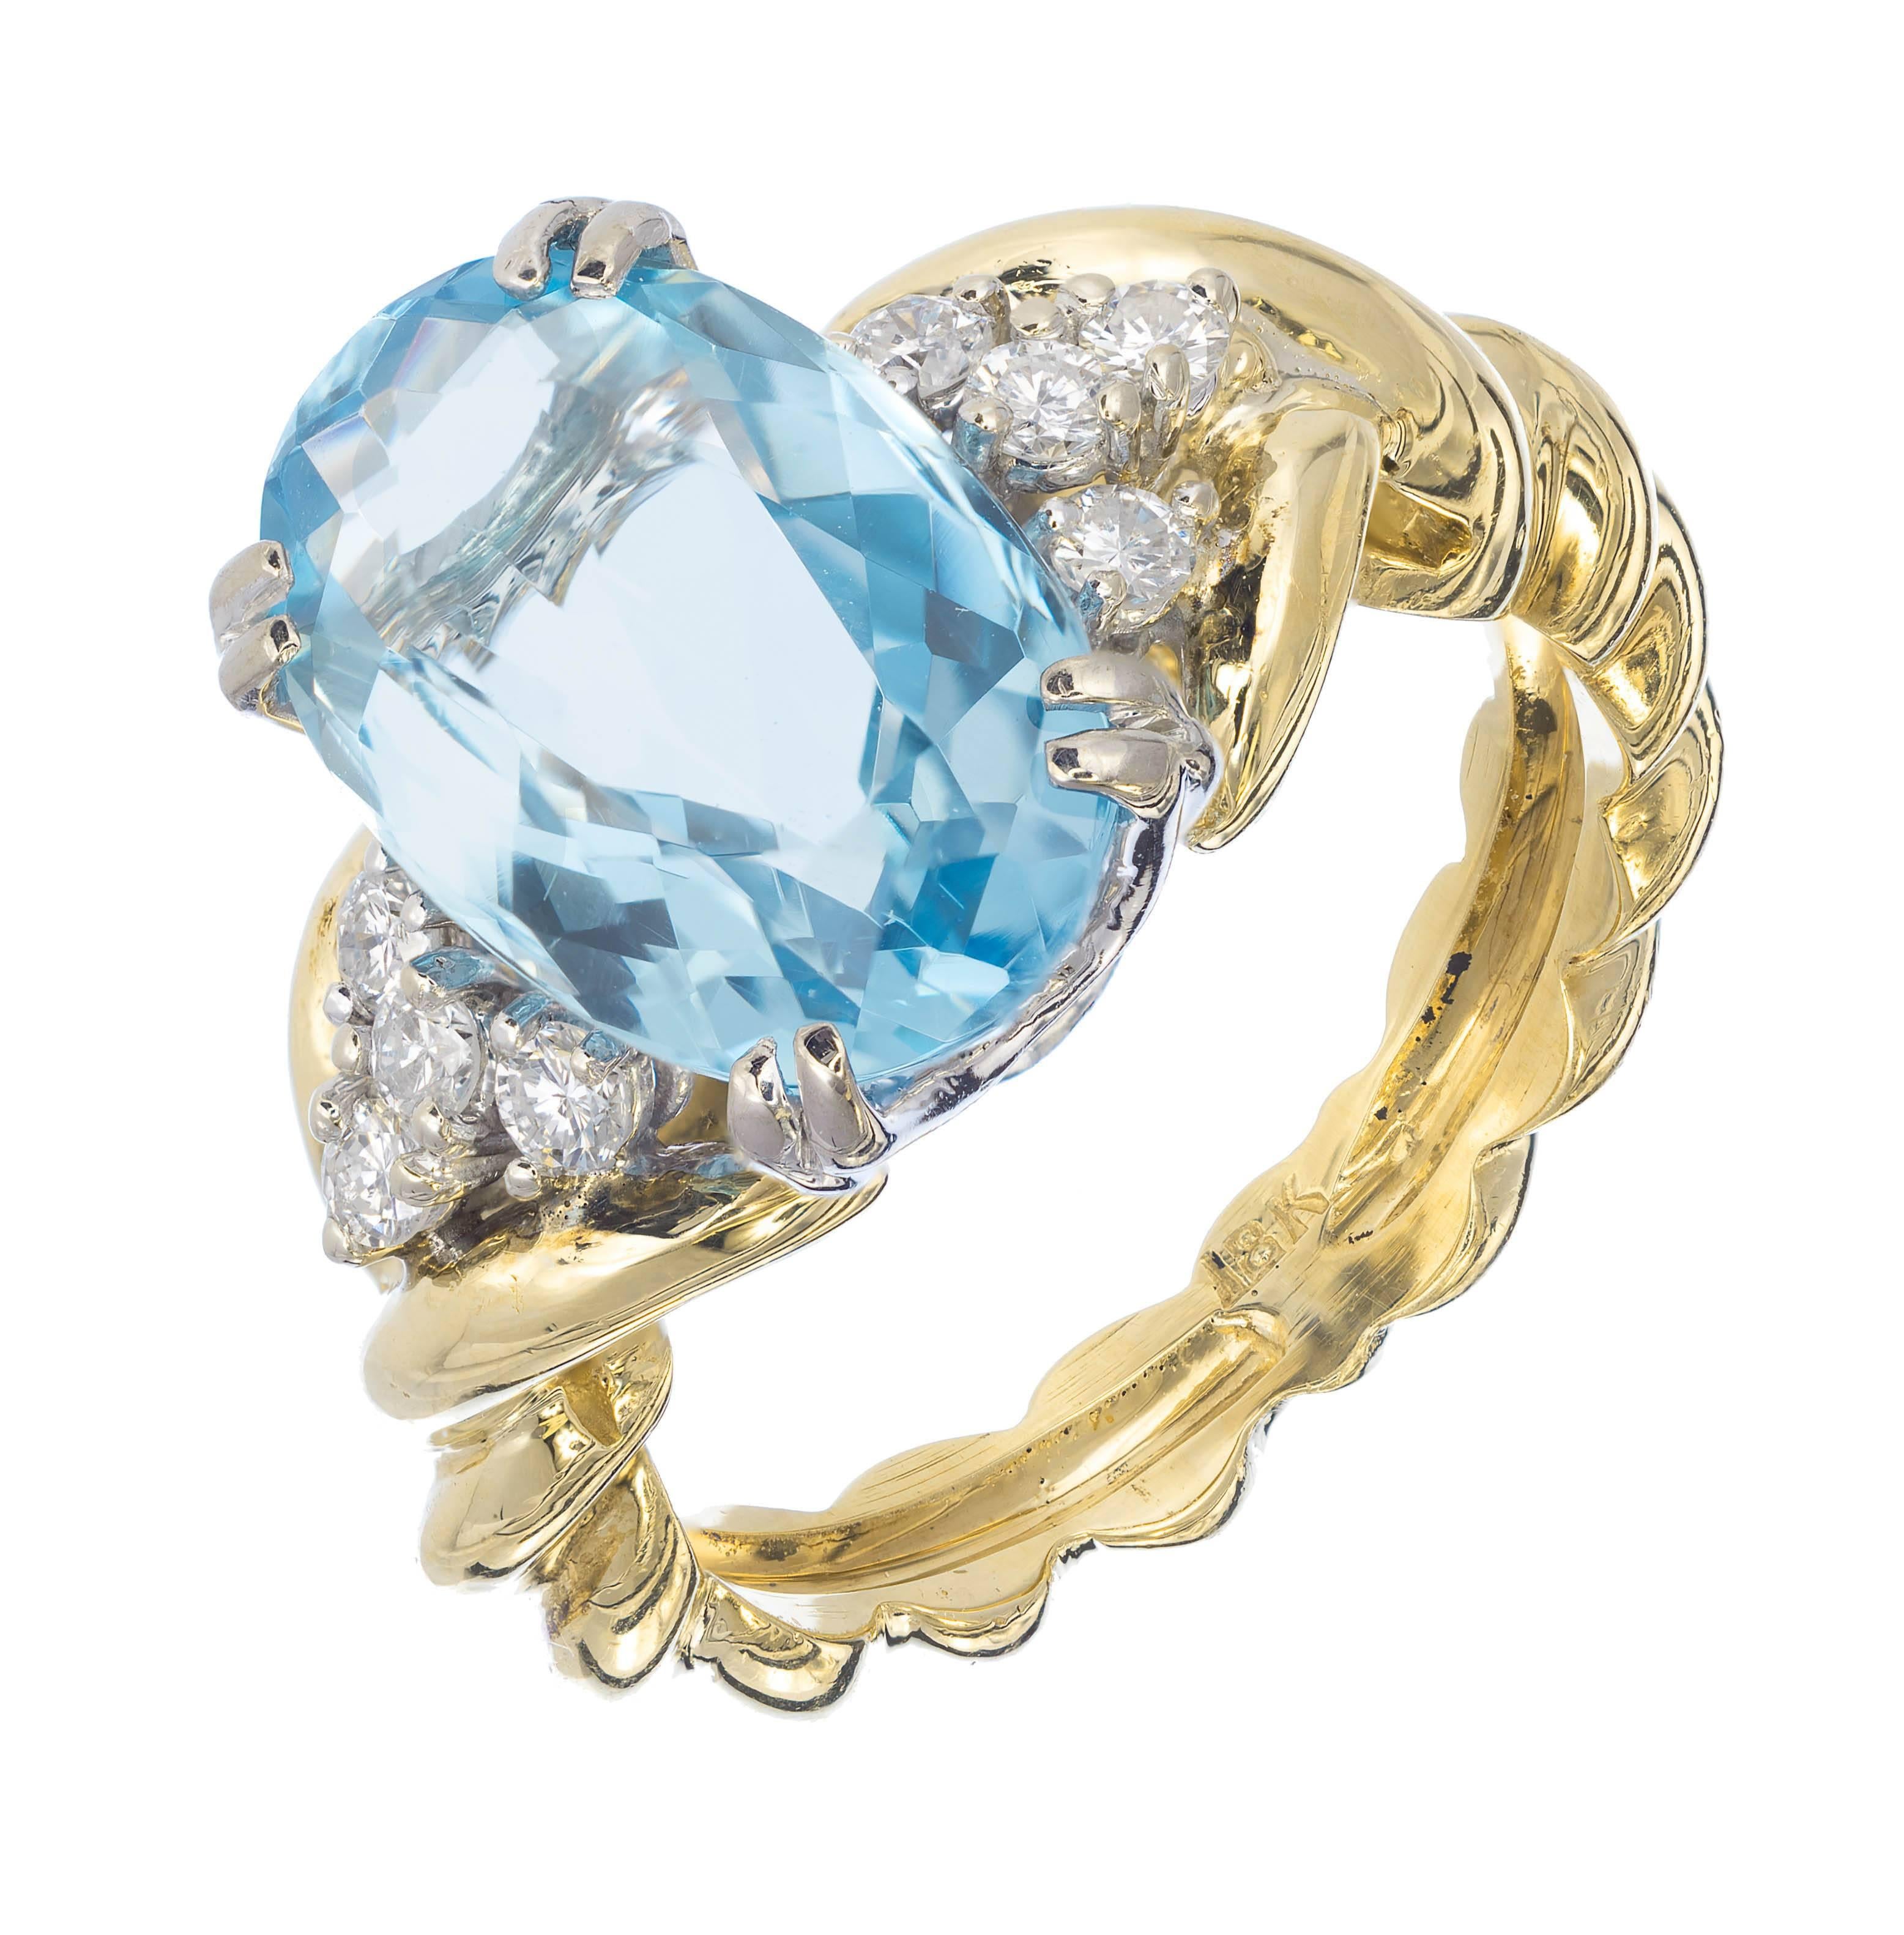 4.11 Carat Natural Oval Aquamarine Diamond Gold Engagement Ring